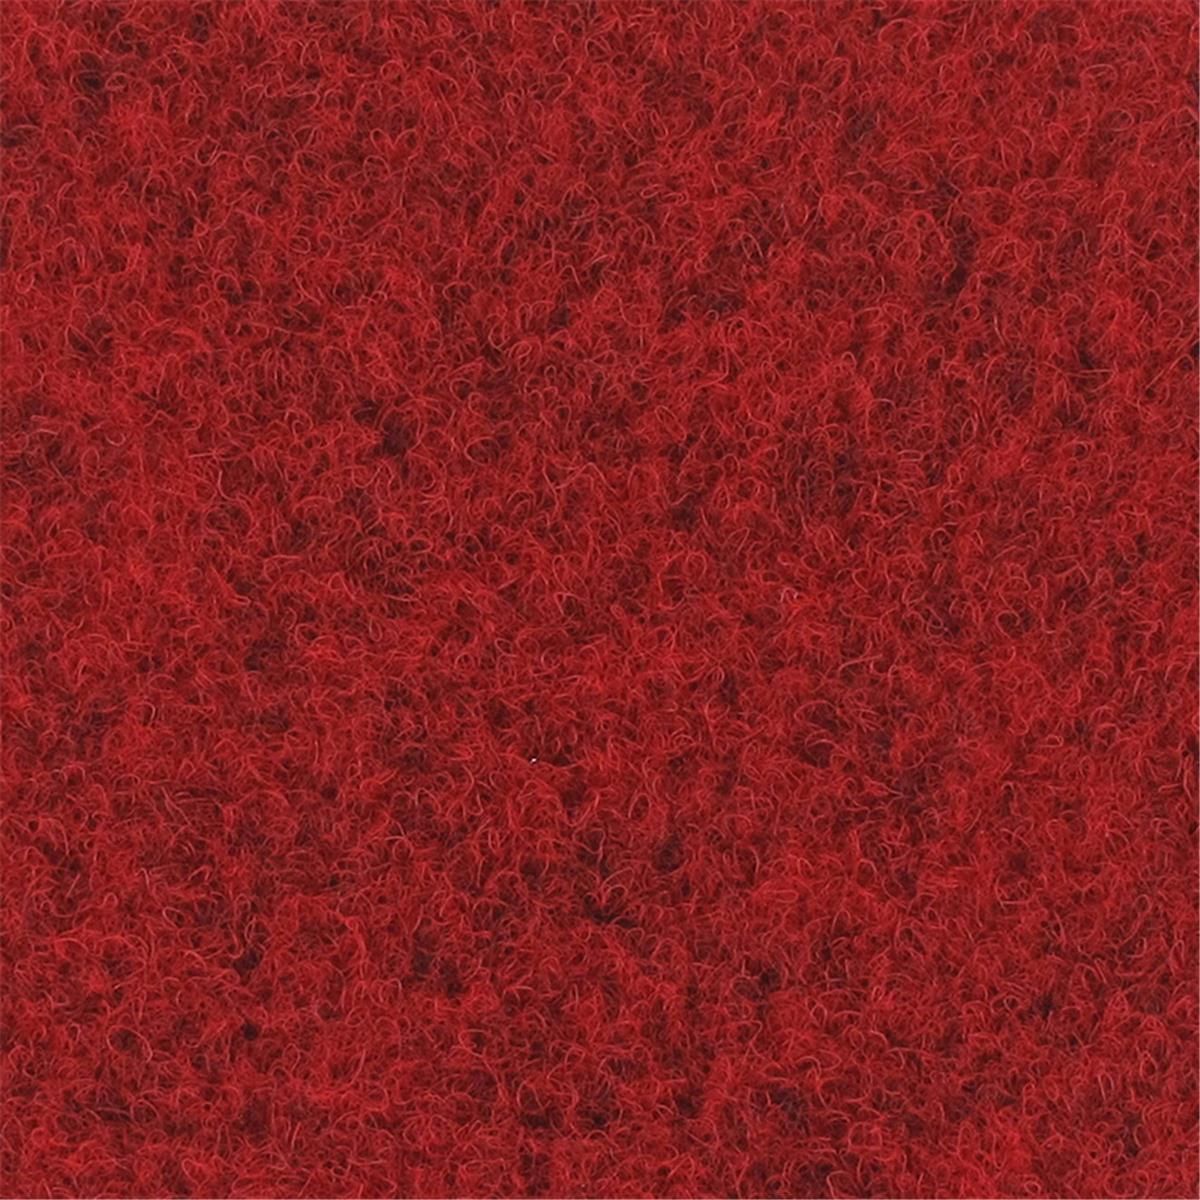 Messeboden Traffic-Fliese EXPOQUADRA Ruby Red 1632 - Sommer Needlepunch - 100 cm x 100 cm